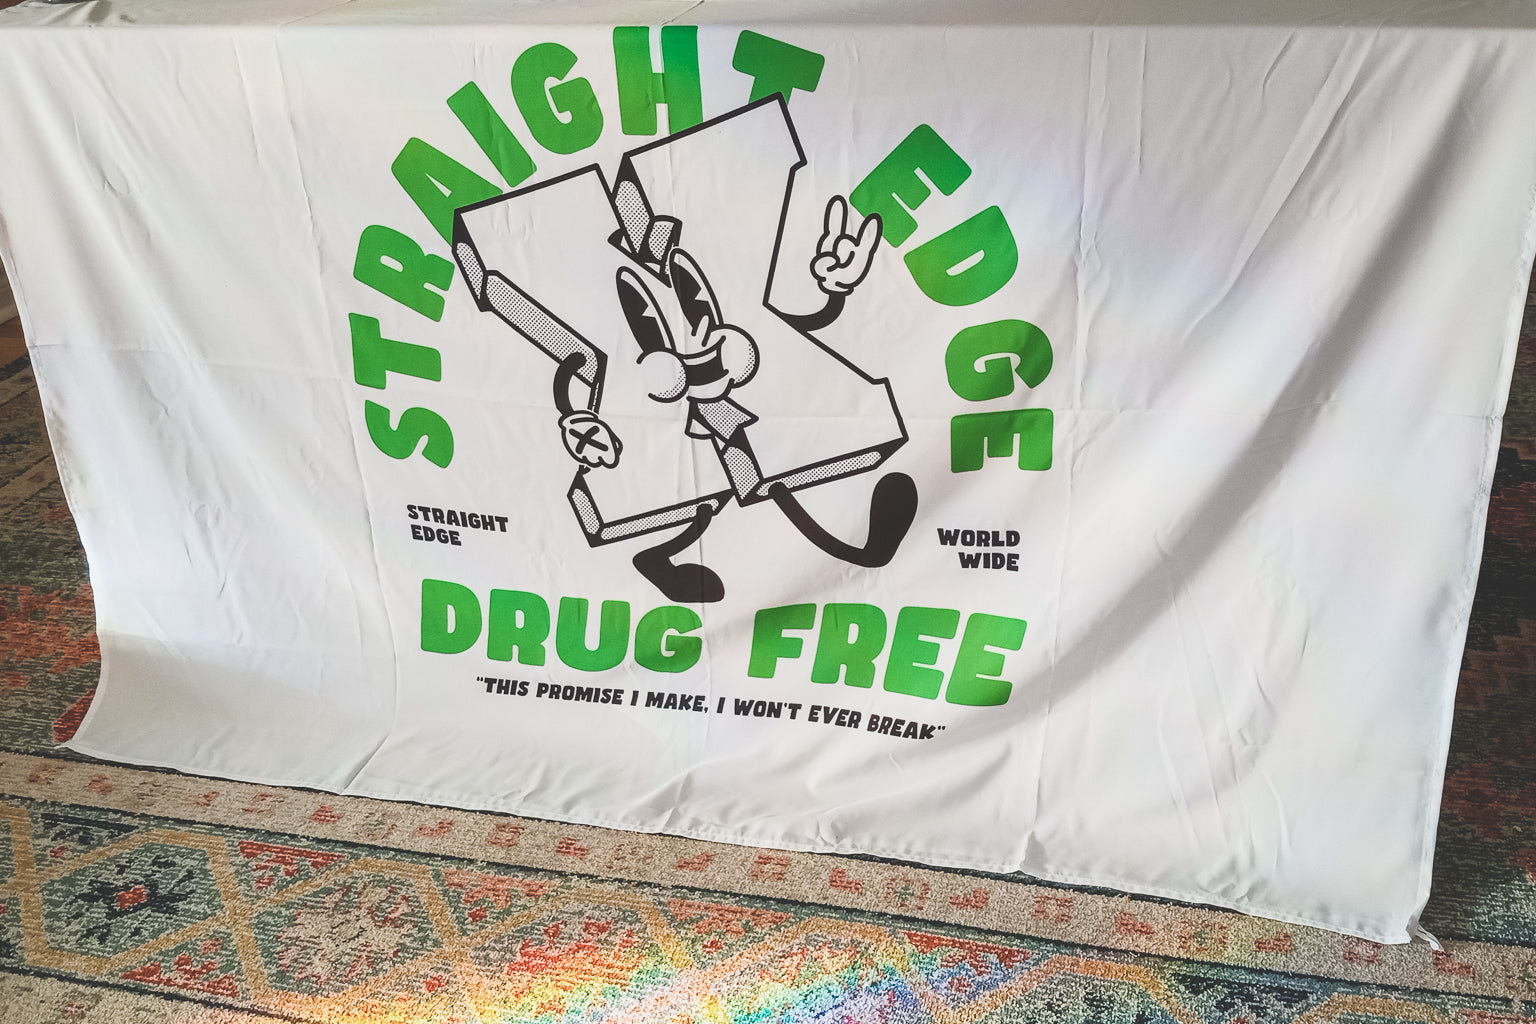 Straight Edge Man Drug Free banner by STRAIGHTEDGEWORLDWIDE